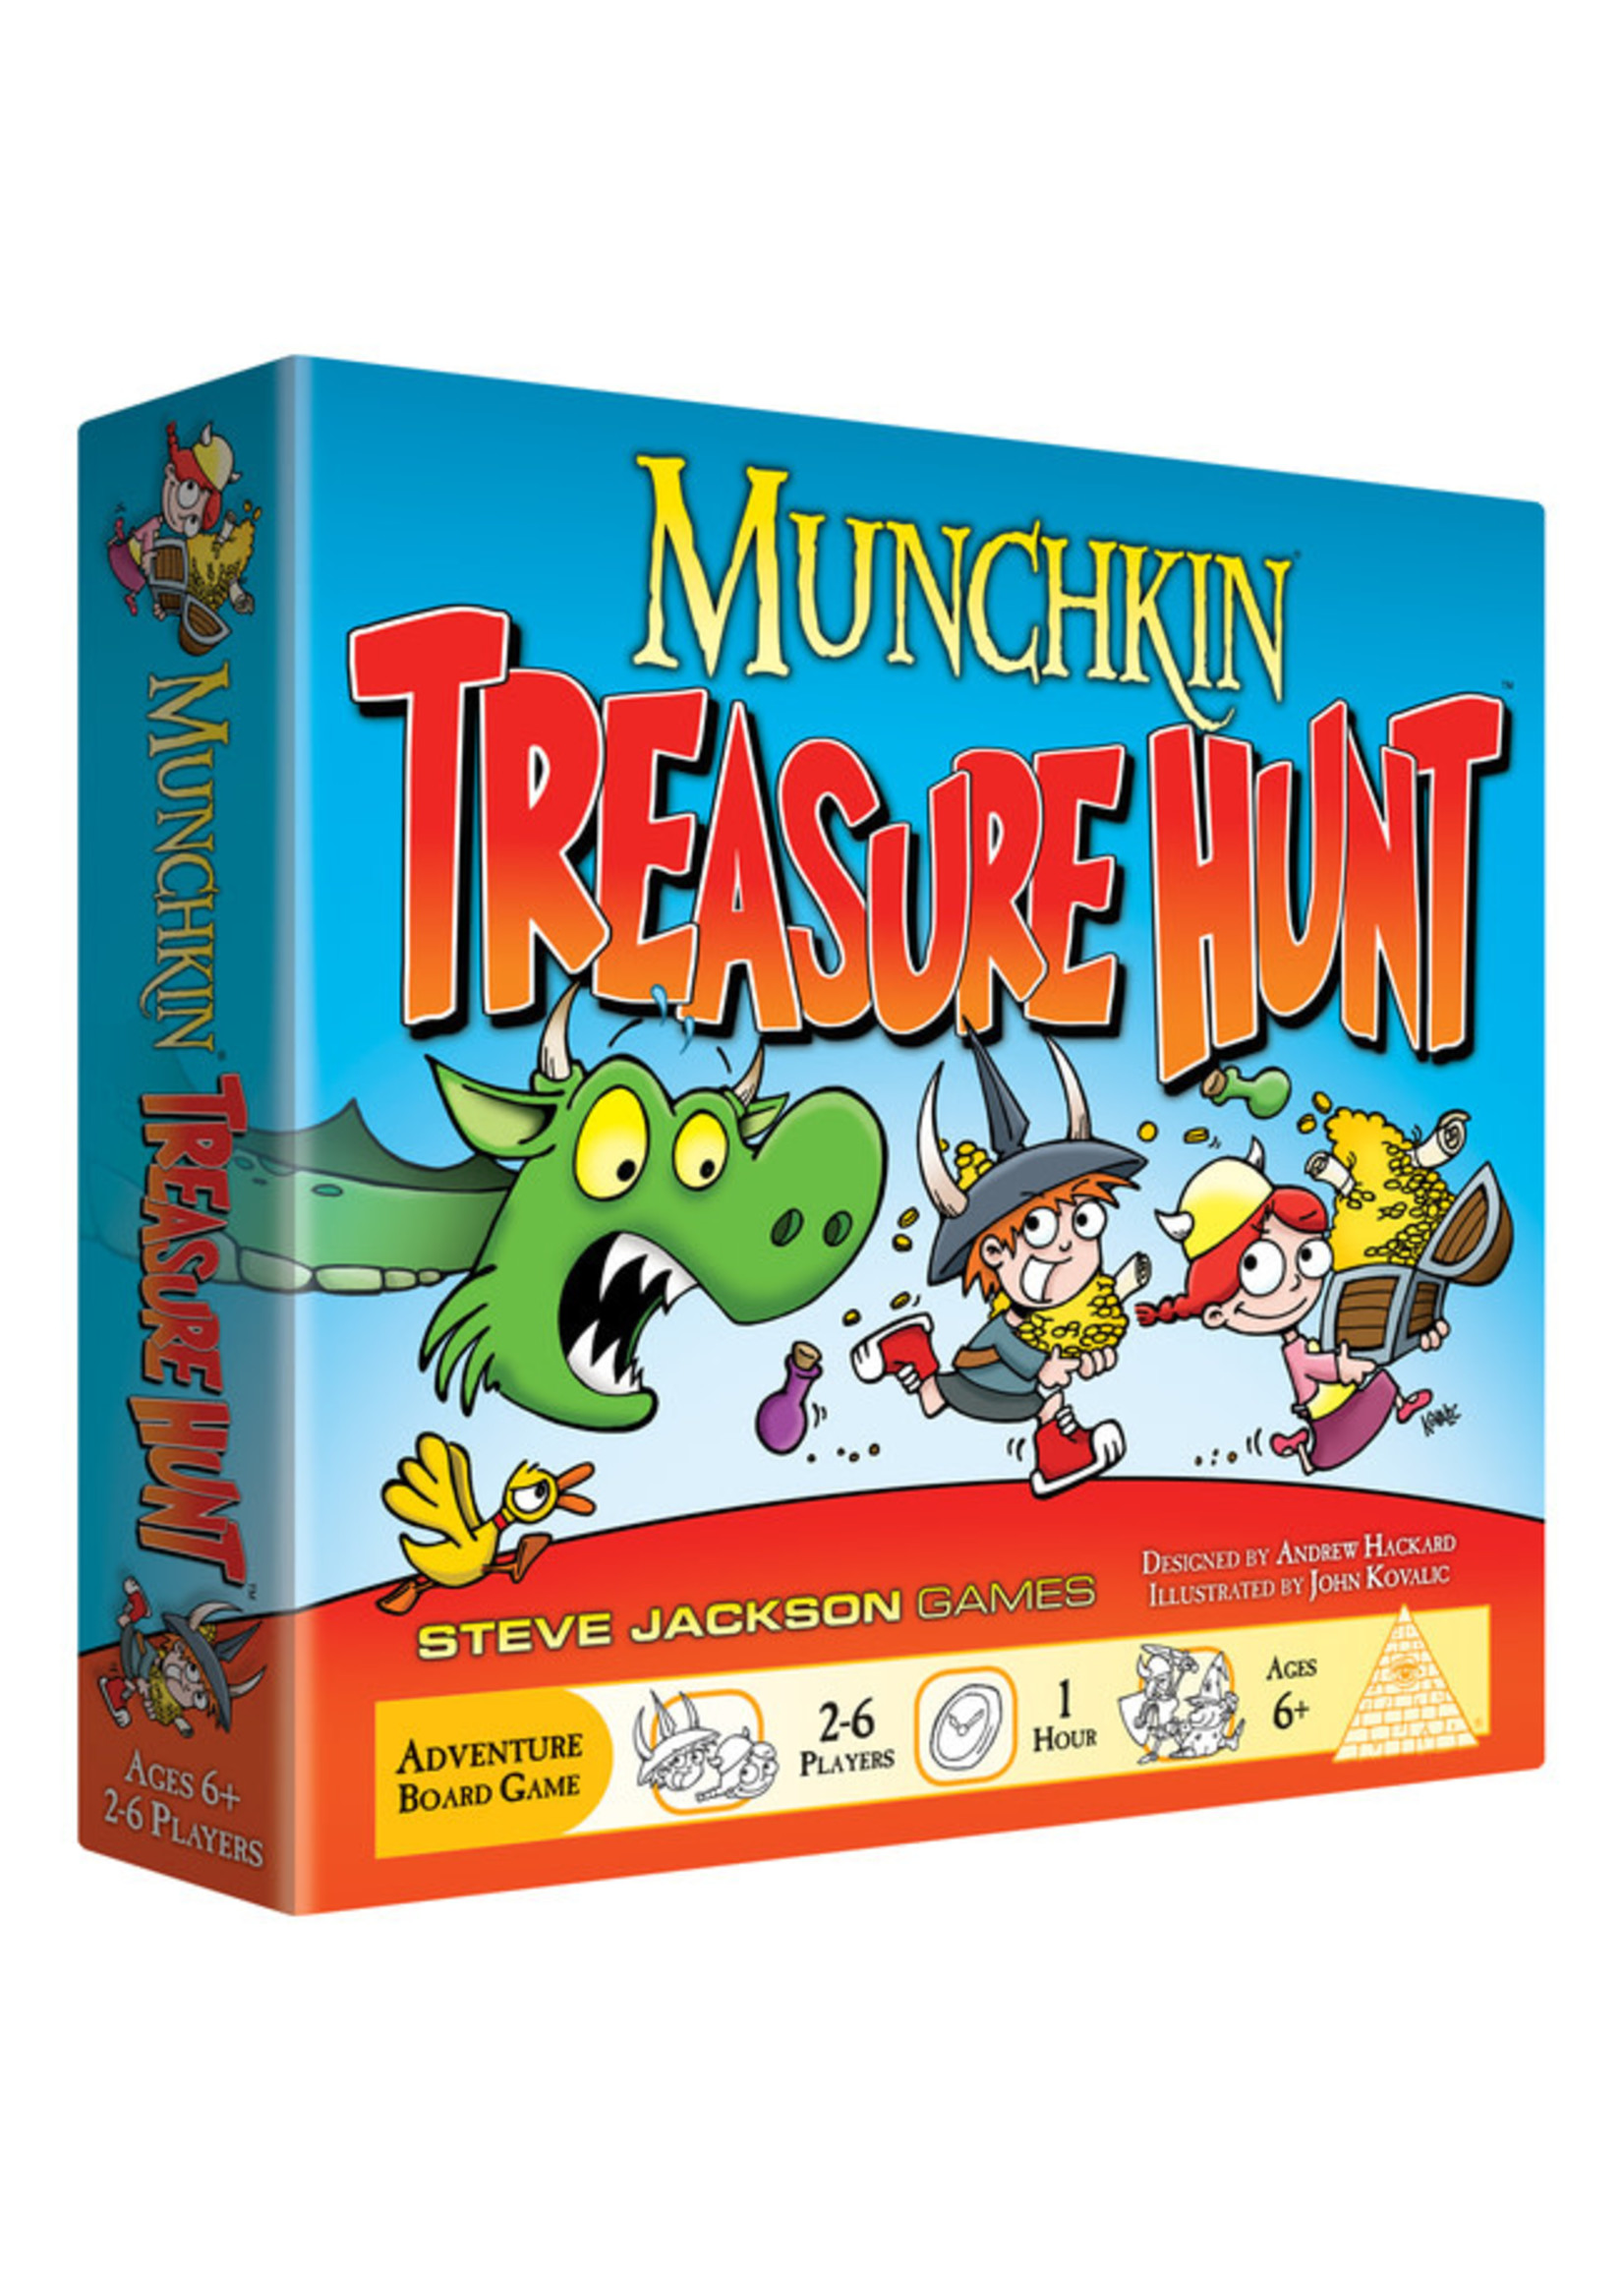 Steve Jackson Games Munchkin Treasure Hunt